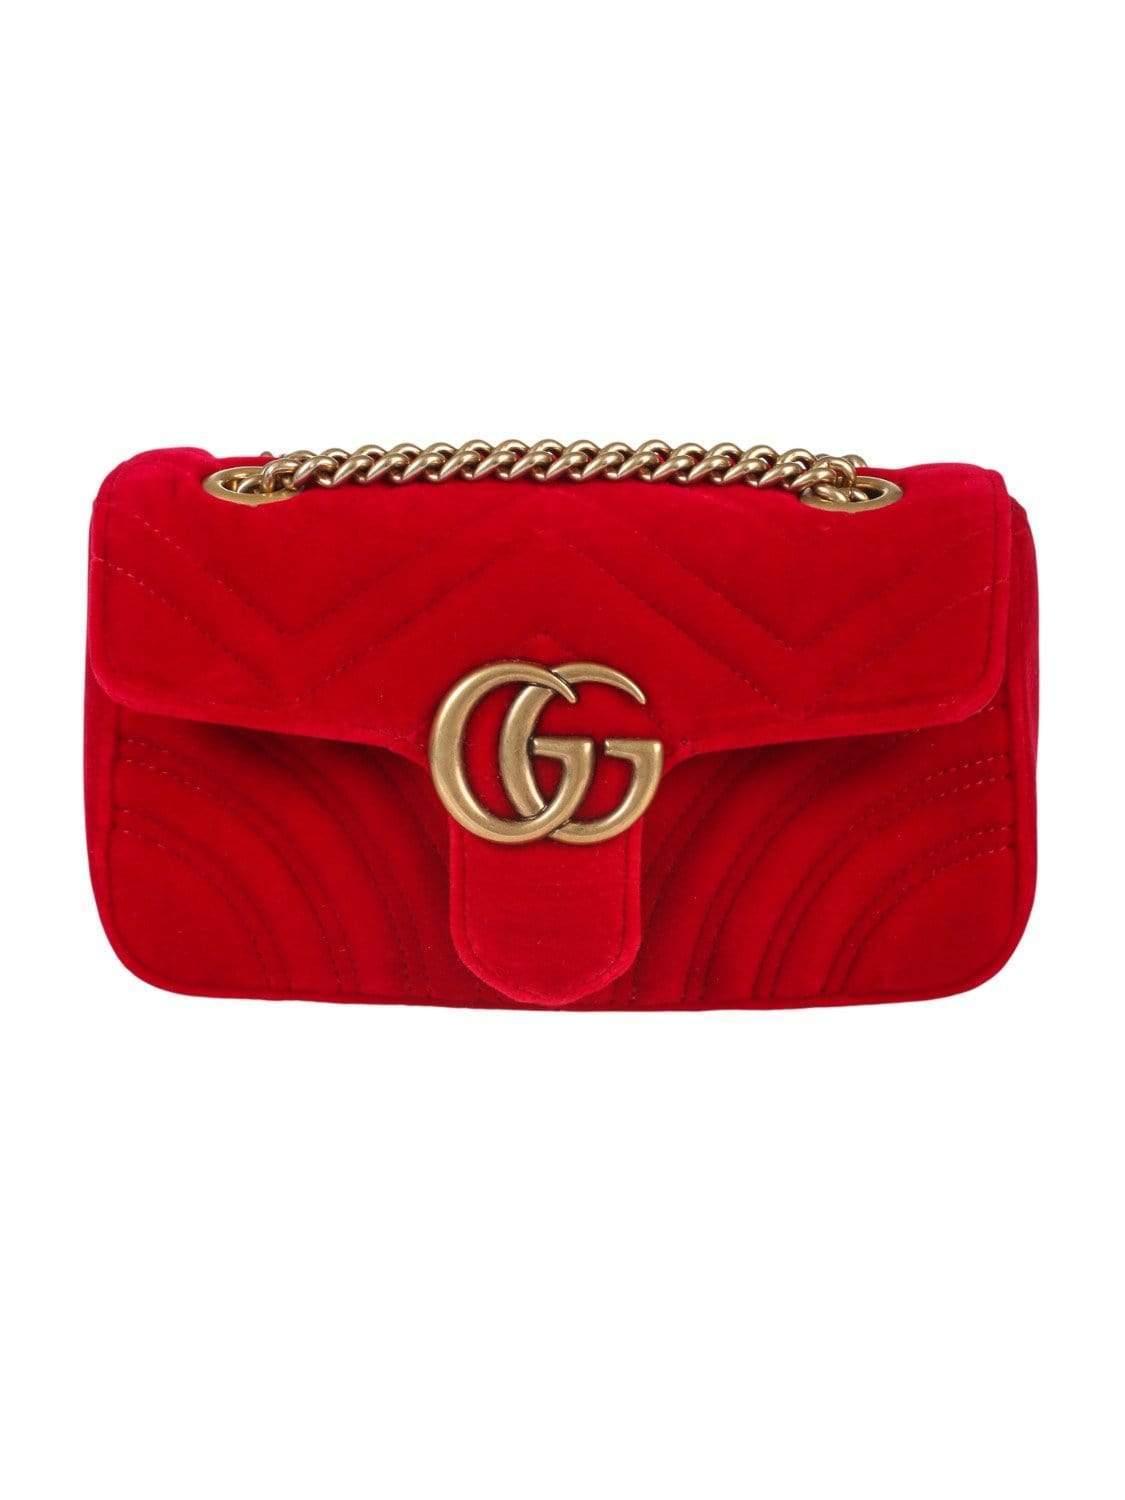 Gucci Marmont Mini Gg Bag In Red Velvet 